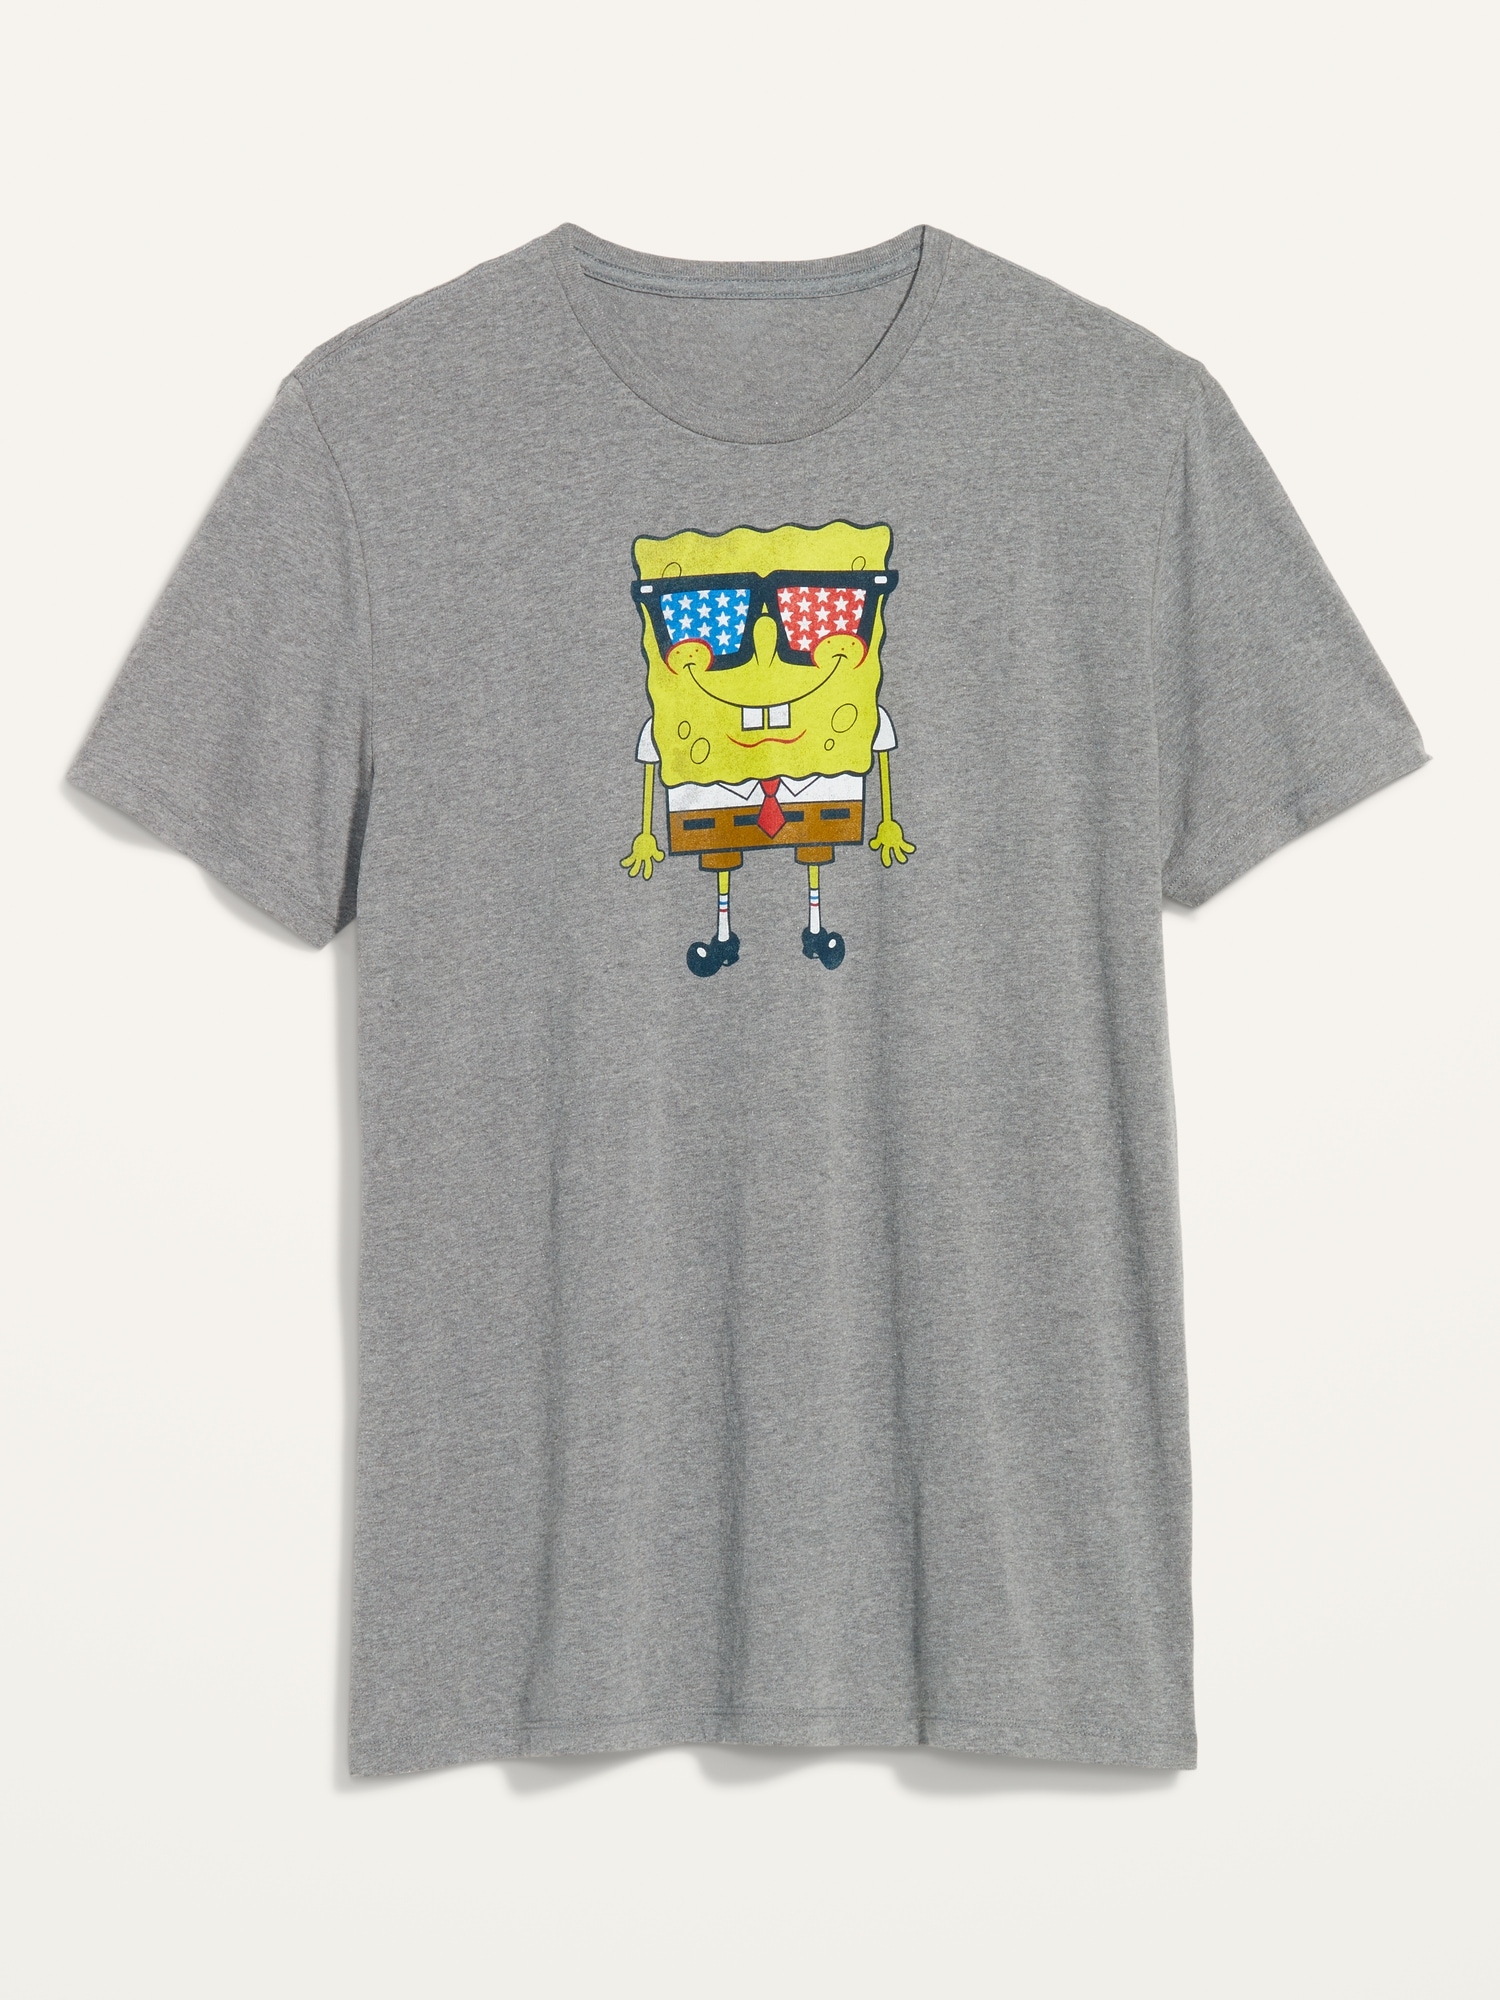 Spongebob Squarepants™ Americana Gender Netural T Shirt For Adults Old Navy 8256